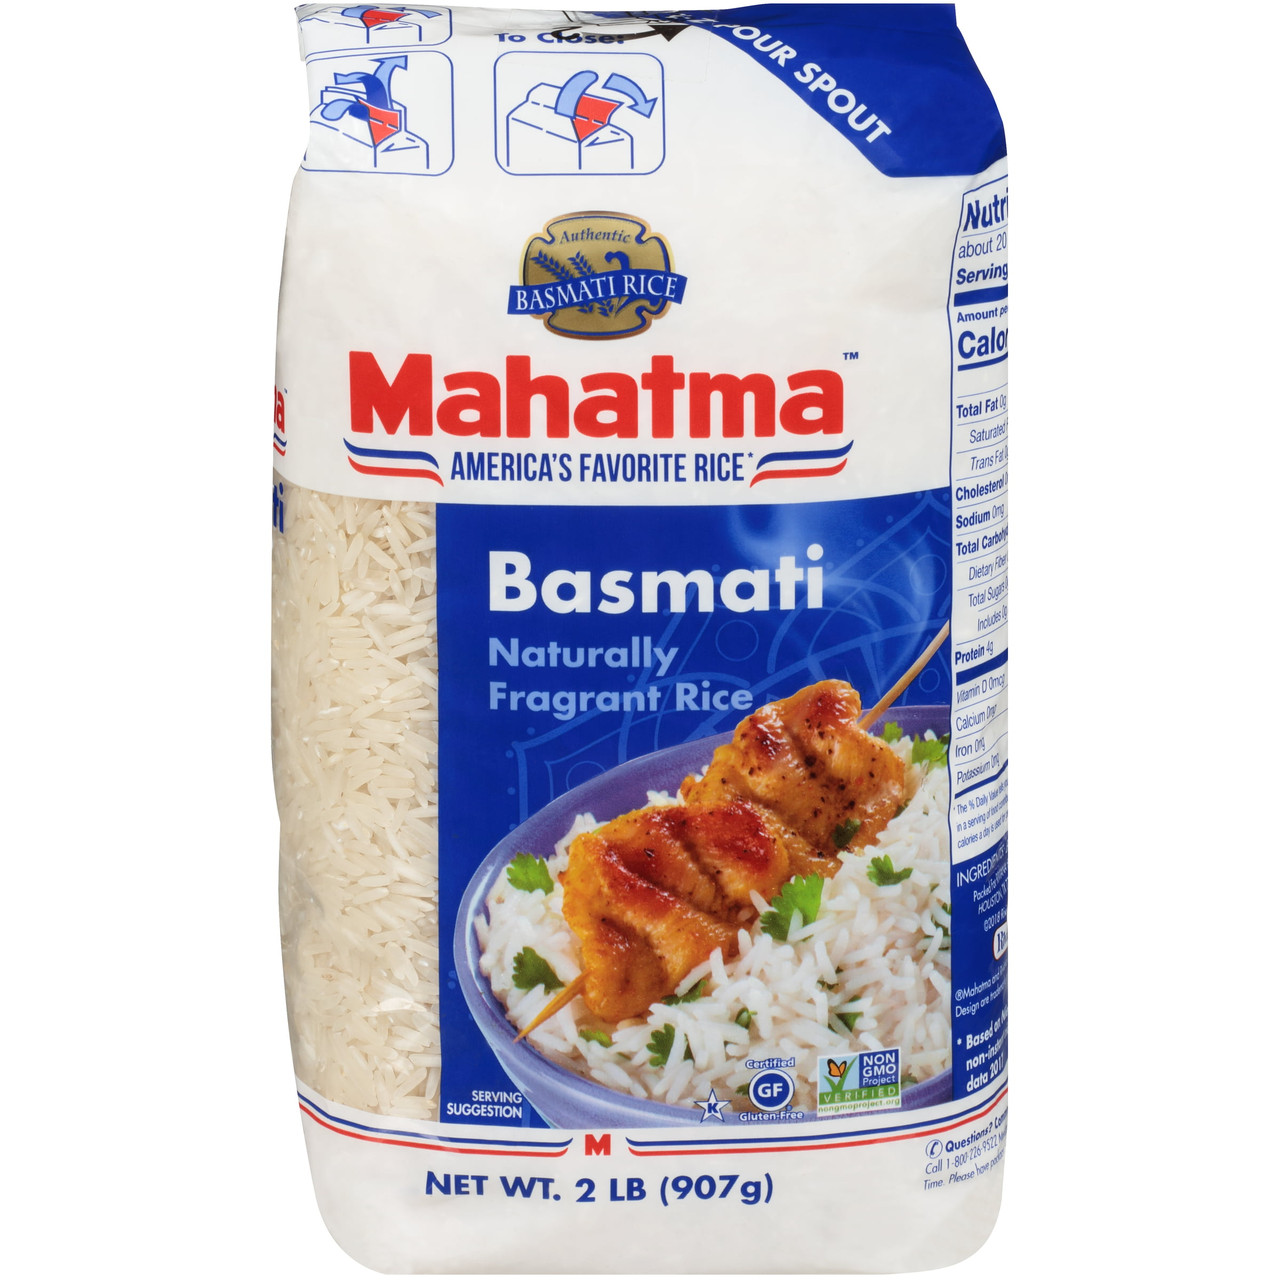 Mahatma Basmati Extra Long Grain White Rice 2 lb Bag - [From 22.00 - Choose pk Qty ] - *Ships from Miami